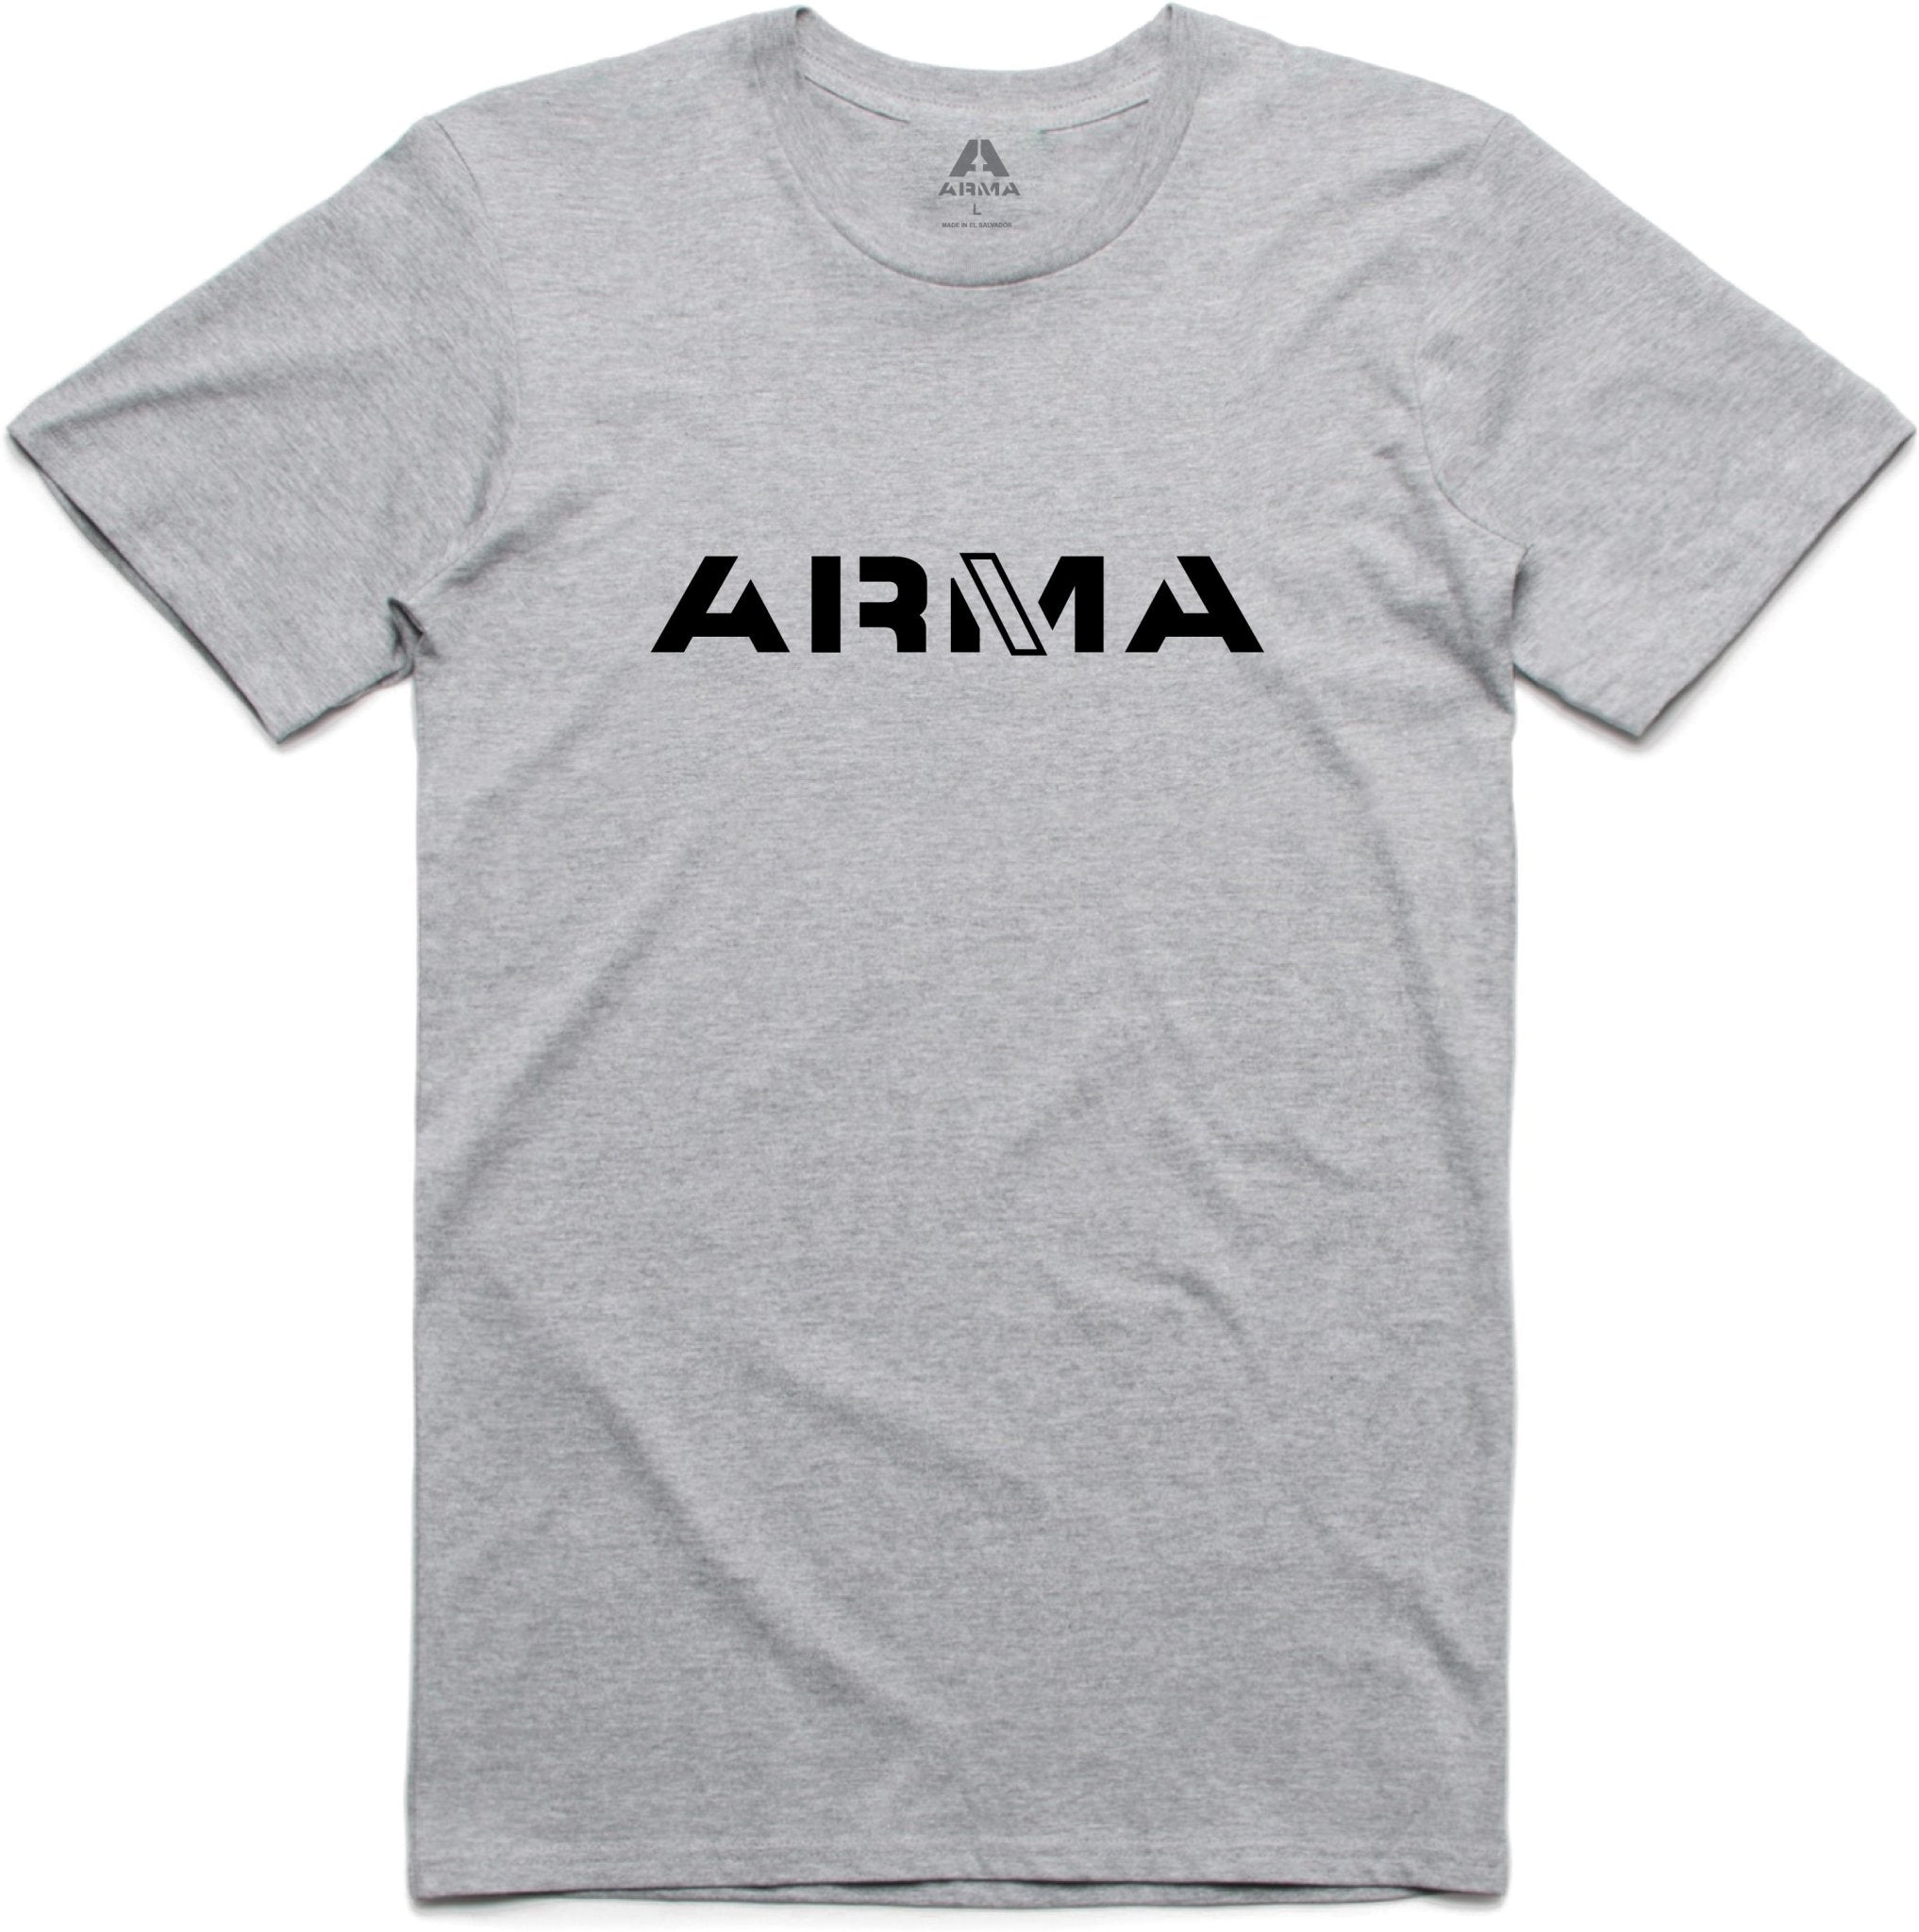 ARMA WordMark Tee - Arma Sport